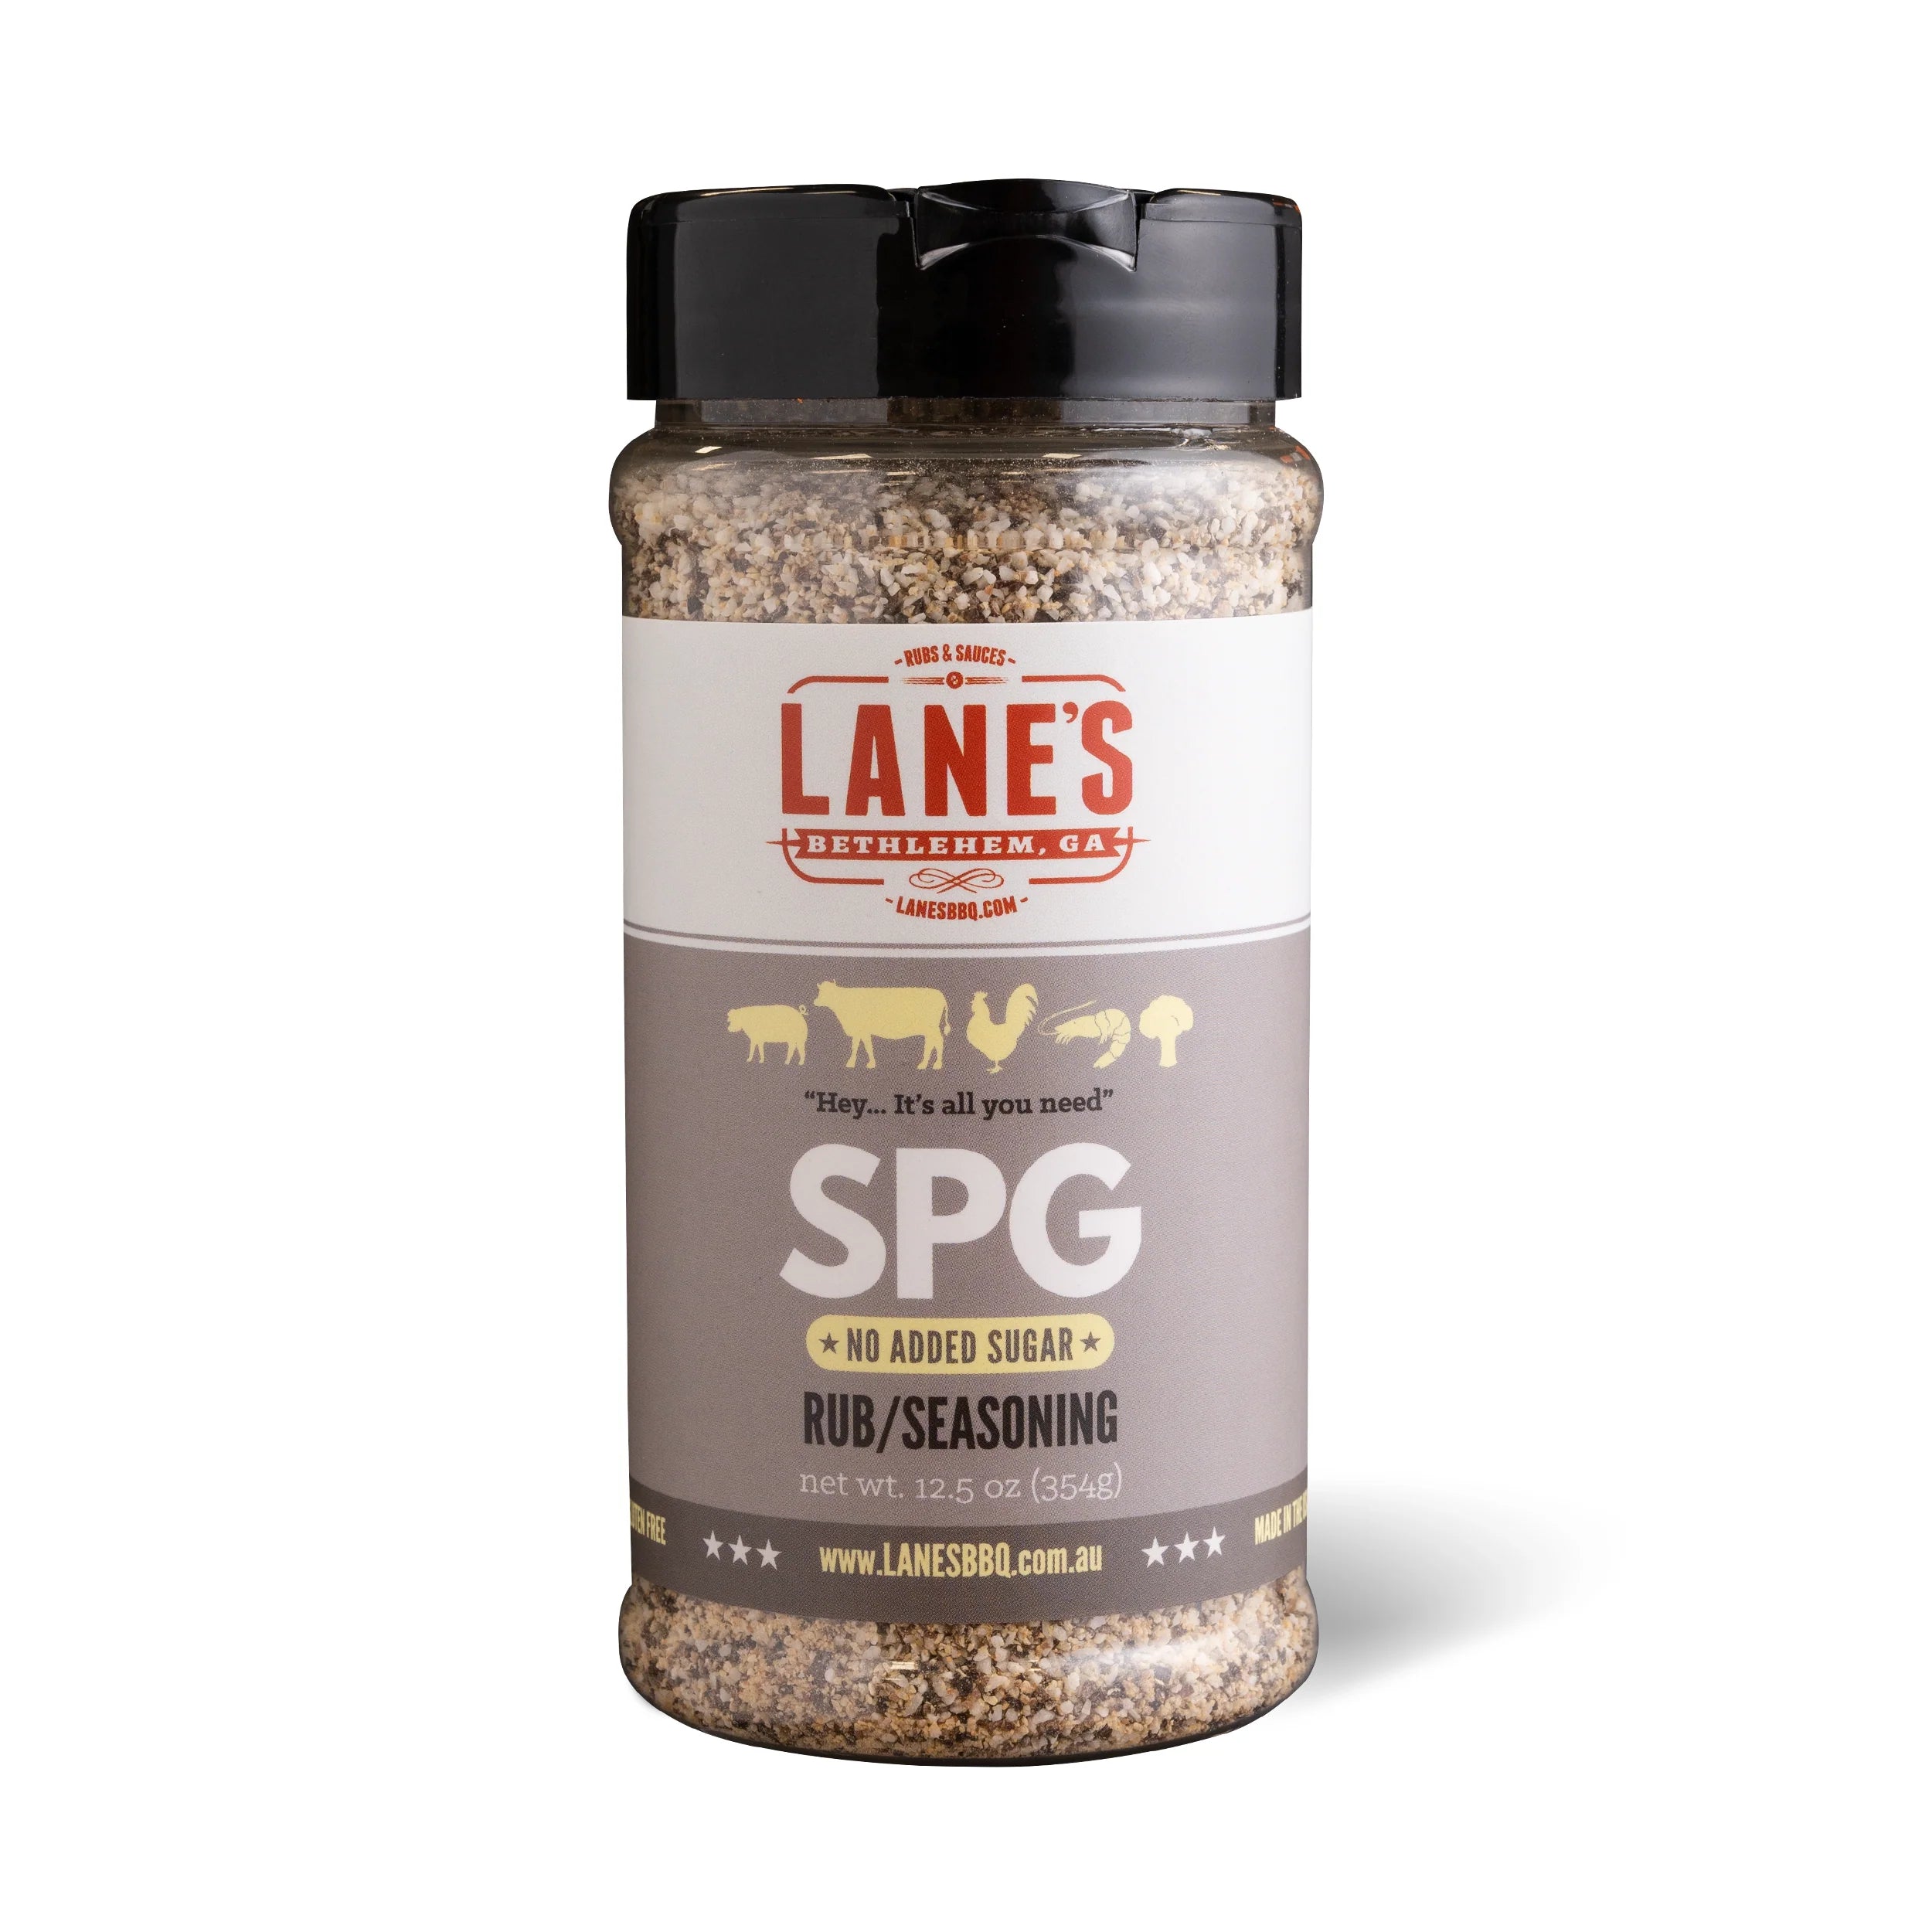 Lanes BBQ SPG (Salt, Pepper, Garlic) Seasoning - 354gm -  - Mansfield Hunting & Fishing - Products to prepare for Corona Virus